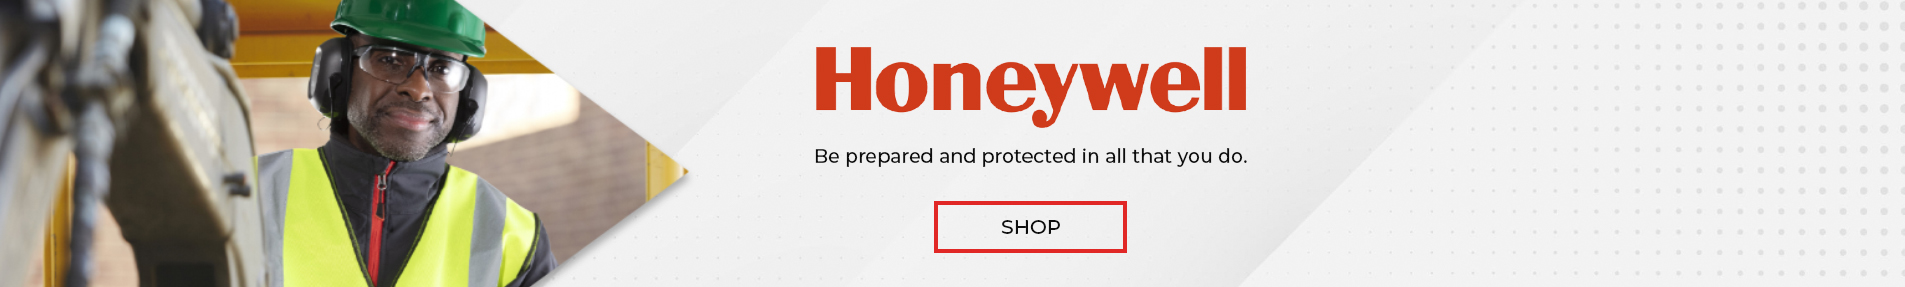 Honeywell banner